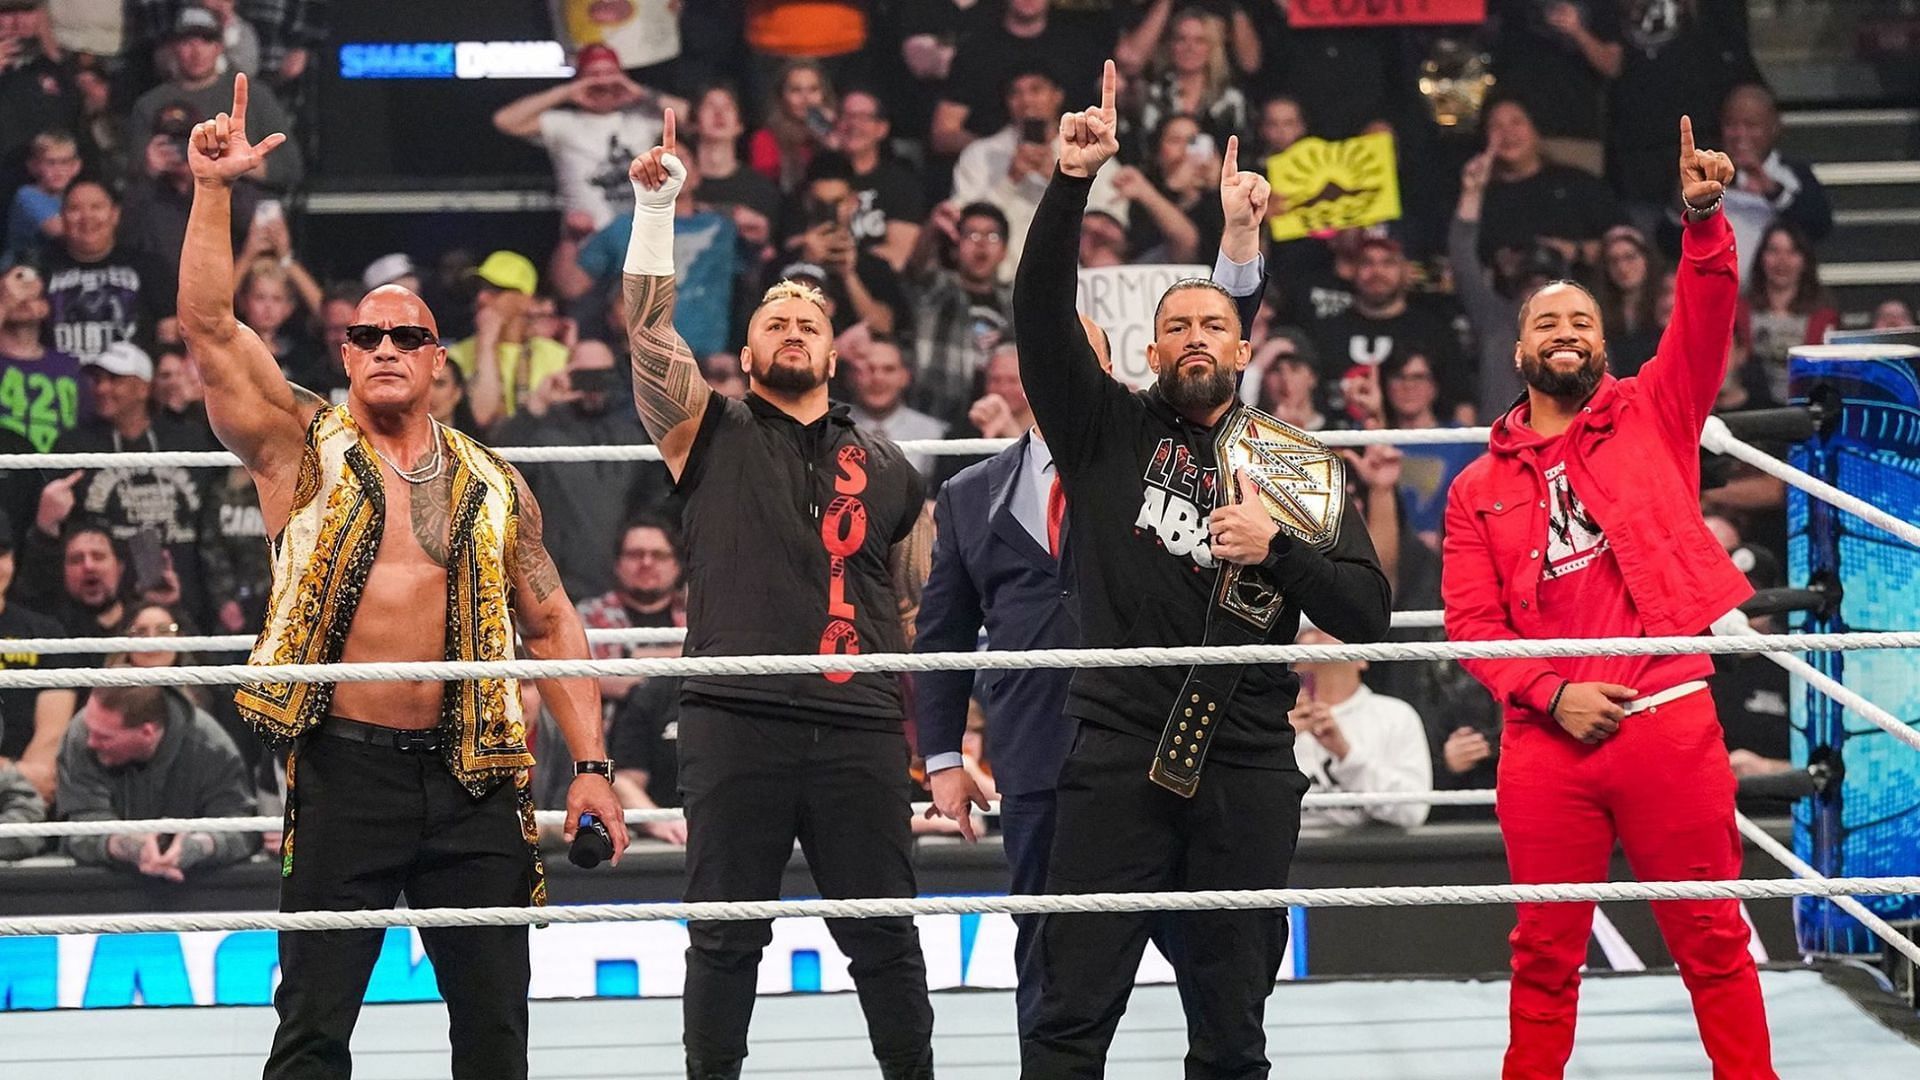 The Rock is newest Bloodline member in WWE.